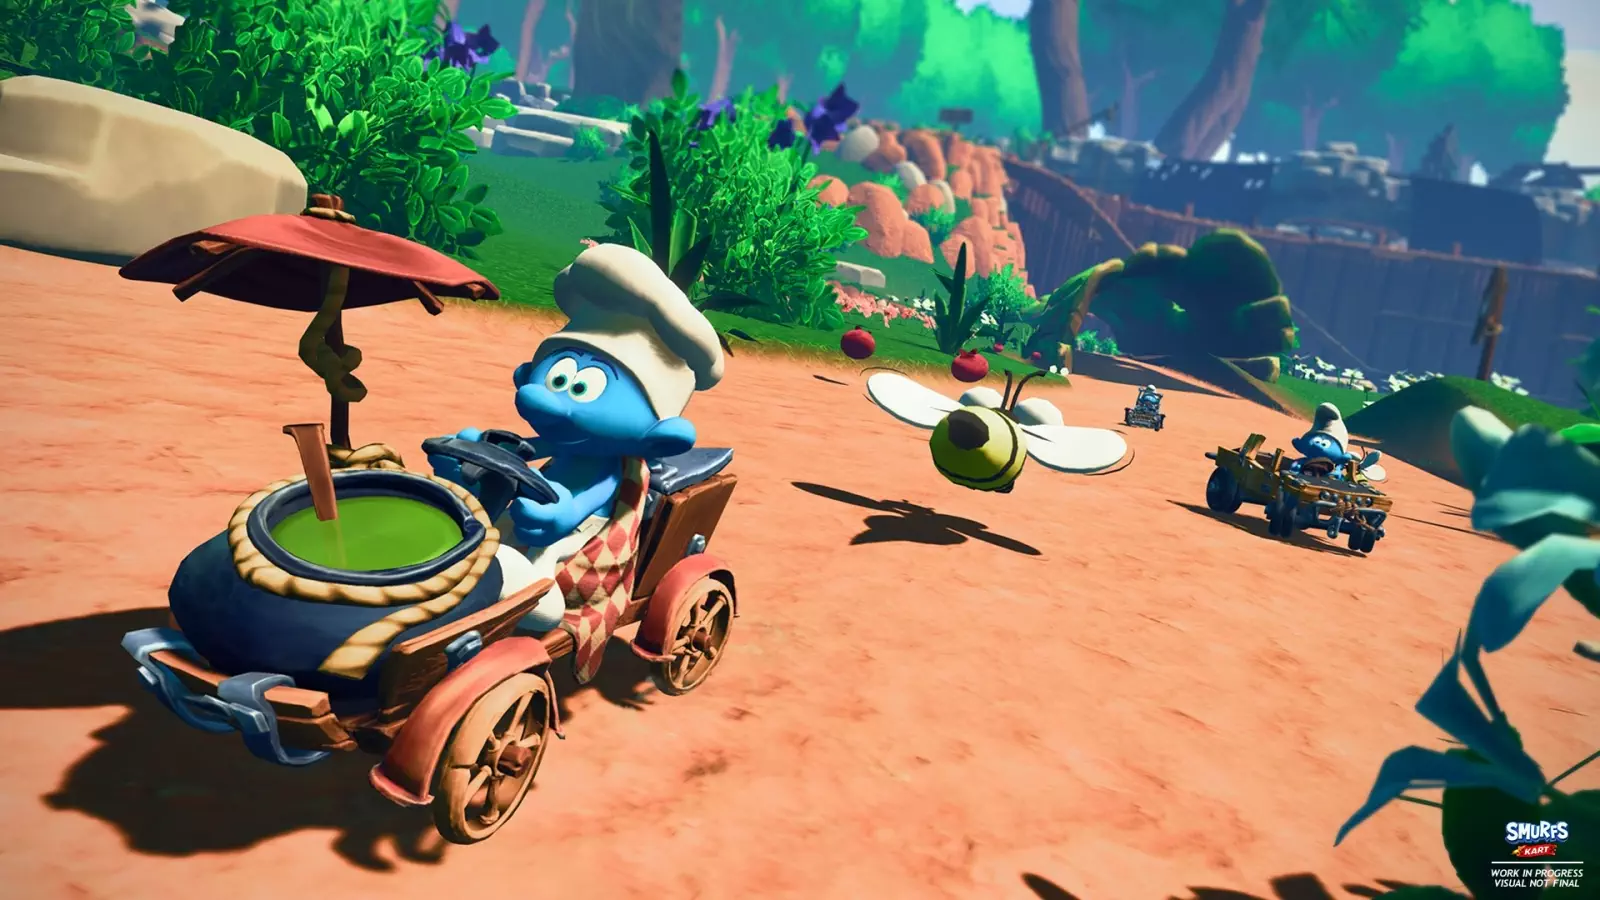 Smurfs Kart! racing onto Nintendo Switch